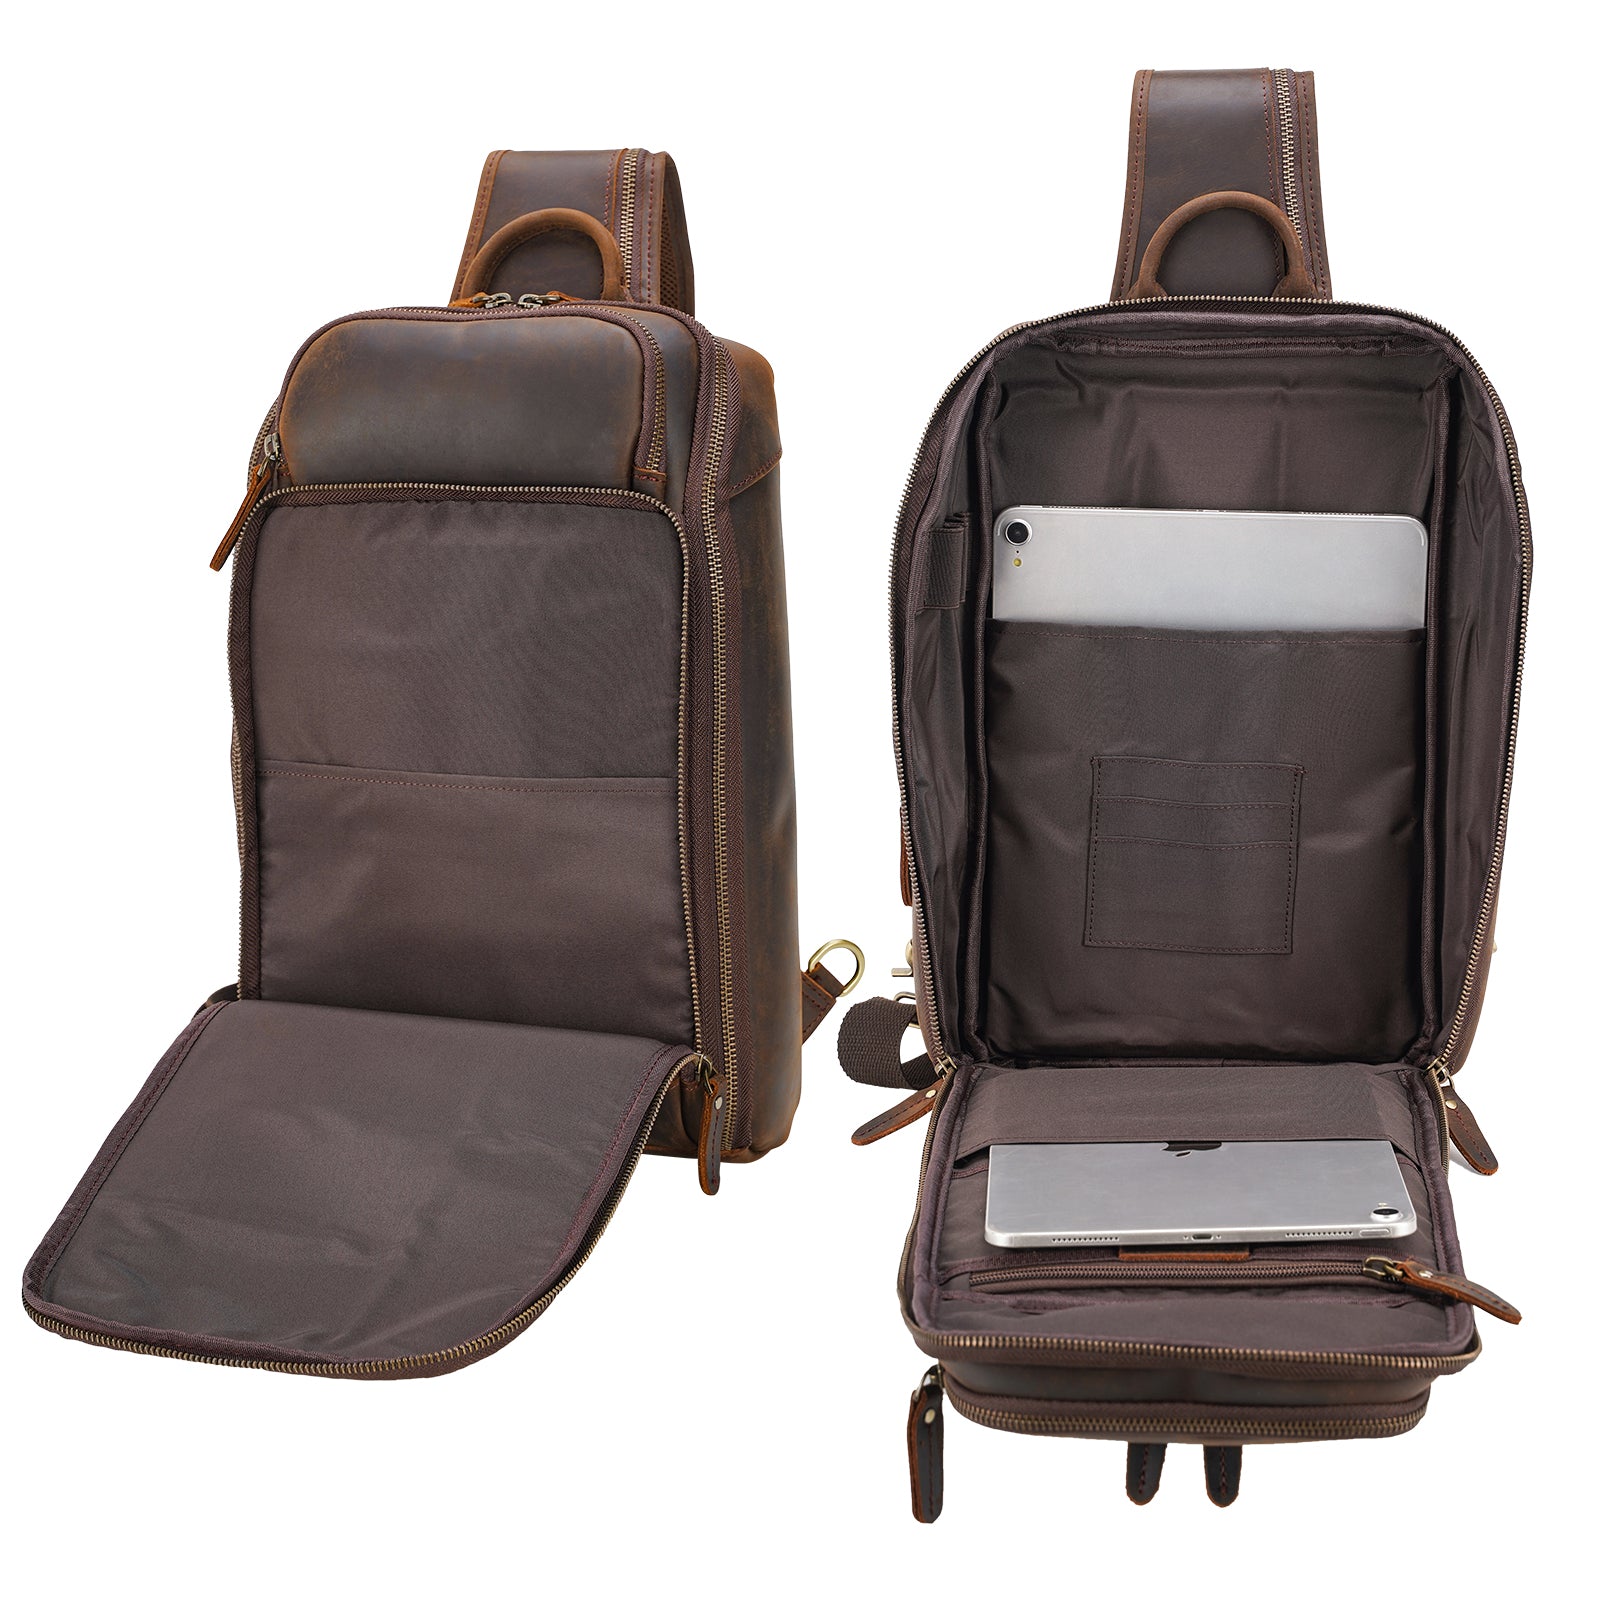 Polare Full Grain Leather Modern Style Sling Shoulder Bag Travel/Hiking Daypack (Dark Brown,Inside)